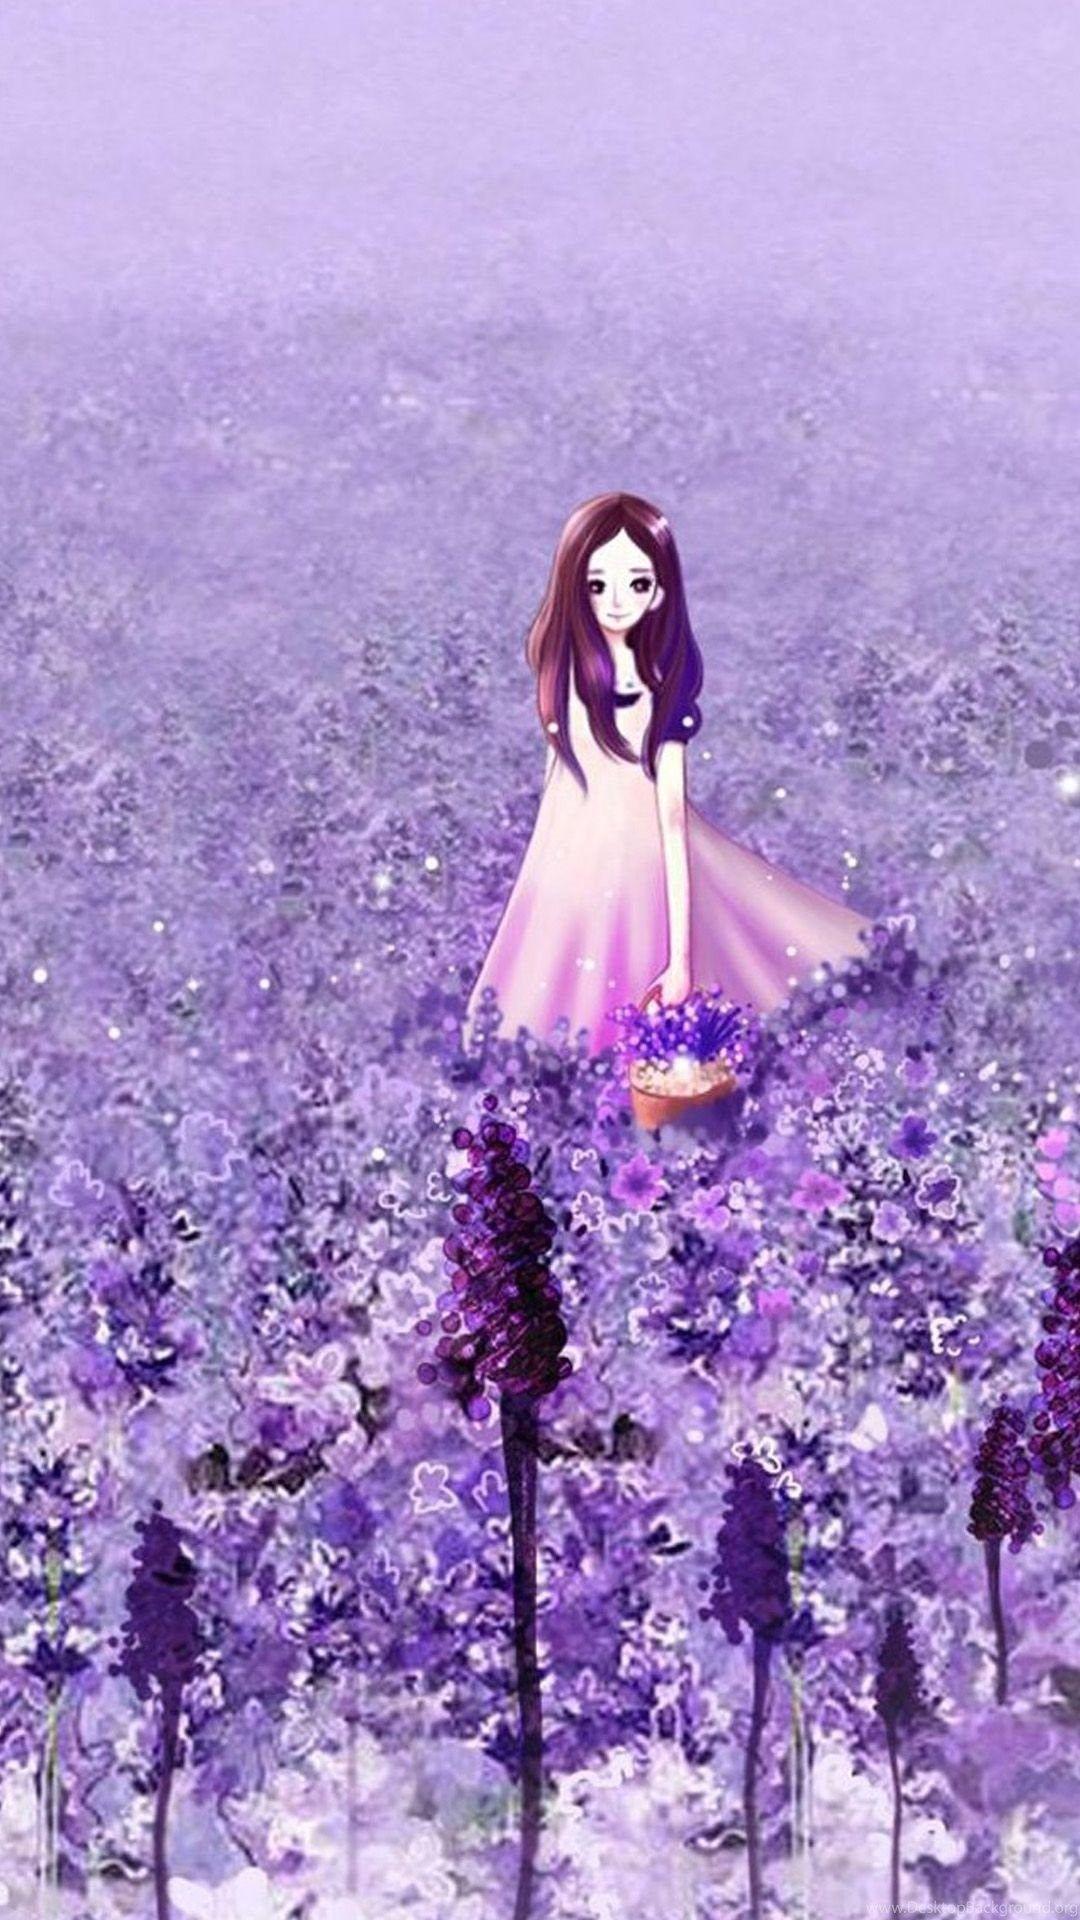 Anime Cute Girl In Purple Flower Garden iPhone 6 Wallpapers ... Desktop Backgrounds